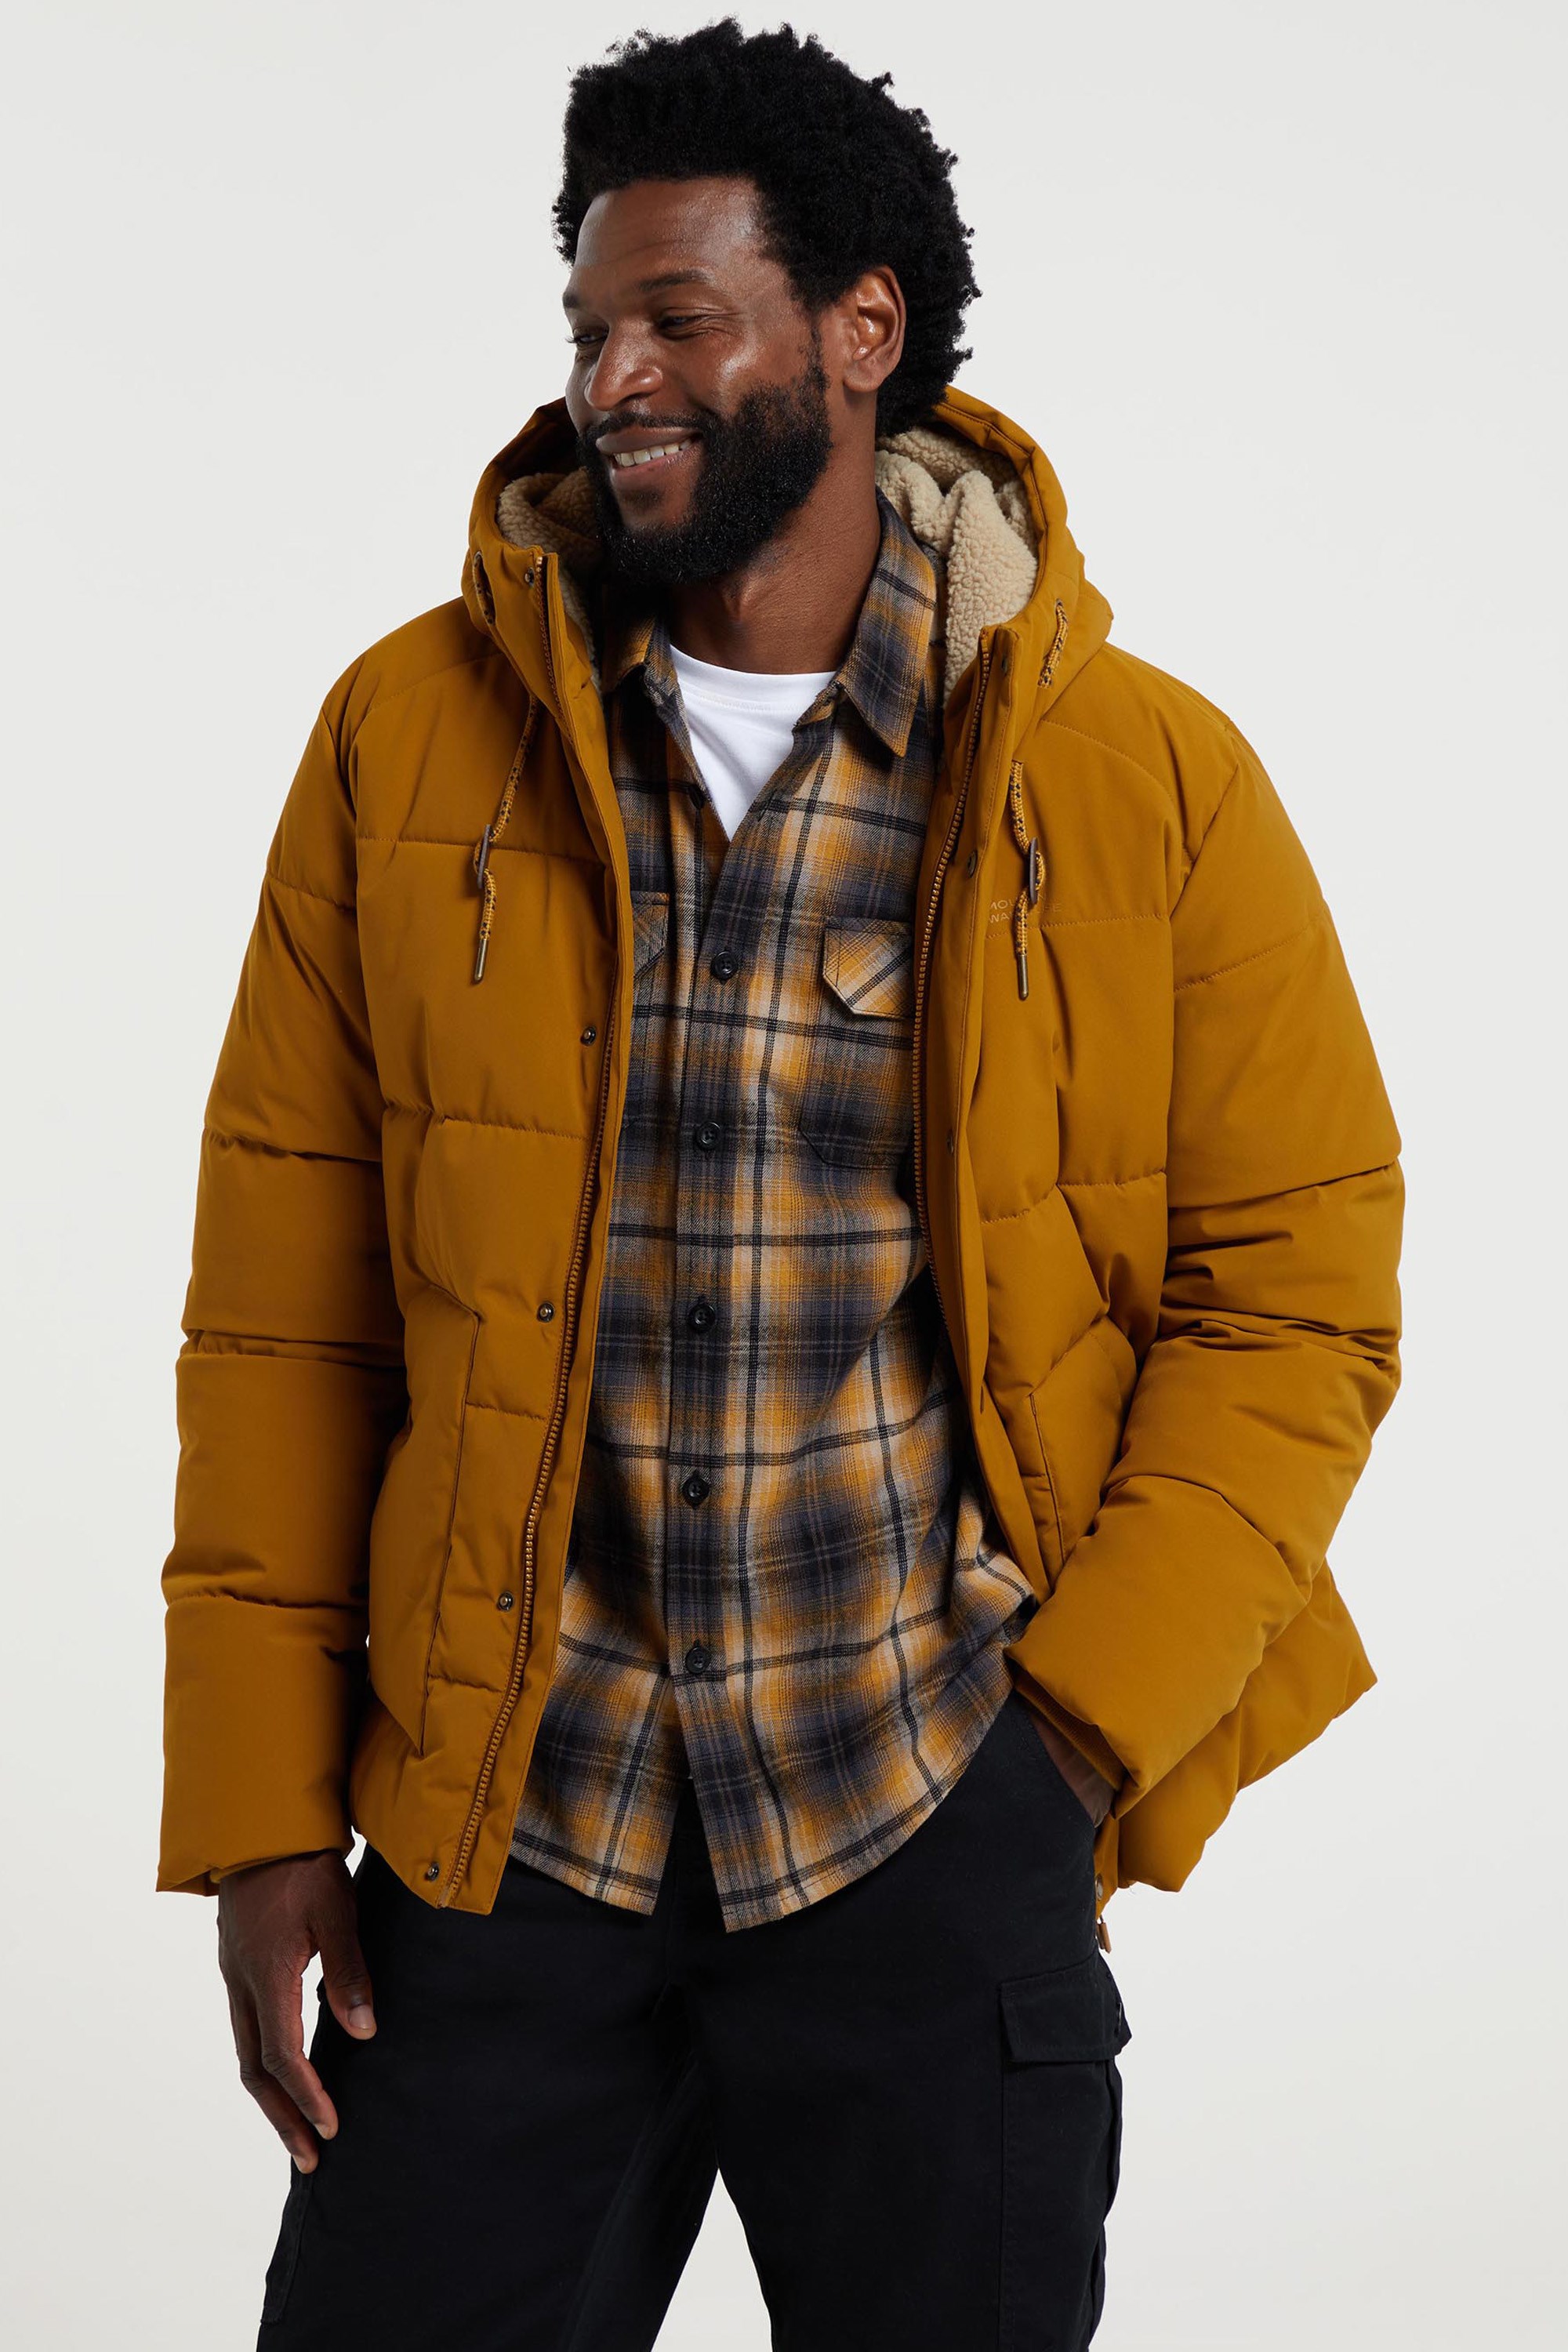 Mountain Essentials Mens Lightweight Insulated Jacket